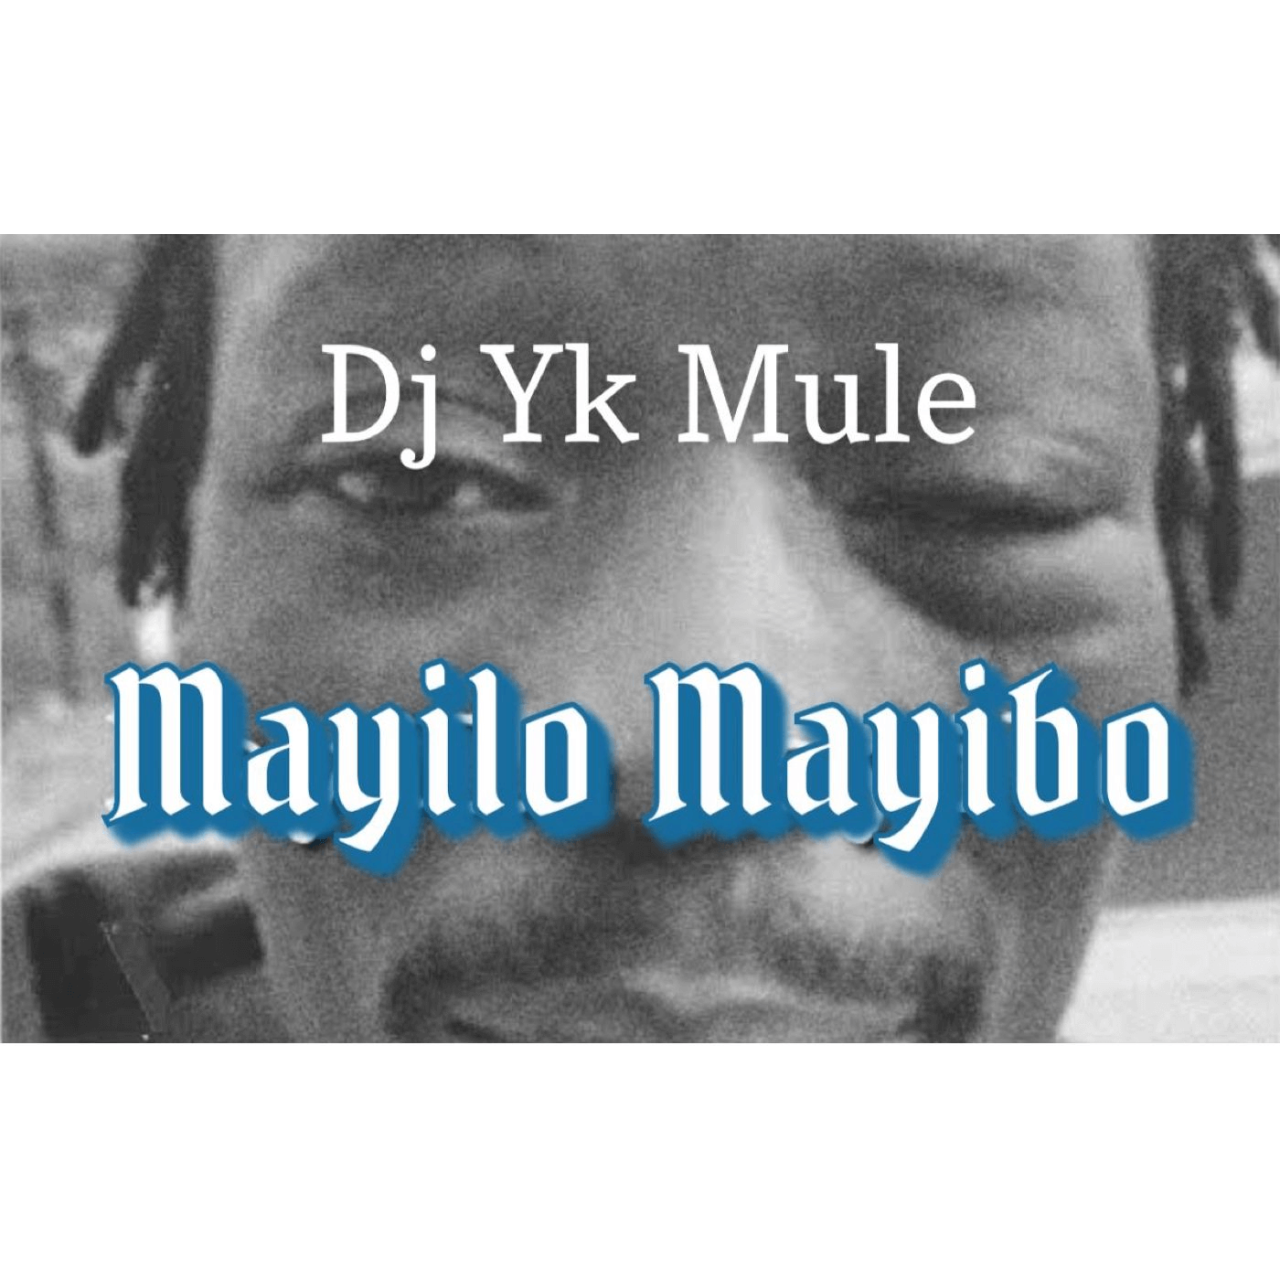 Dj Yk Mule Beat - Mayilo Mayibo